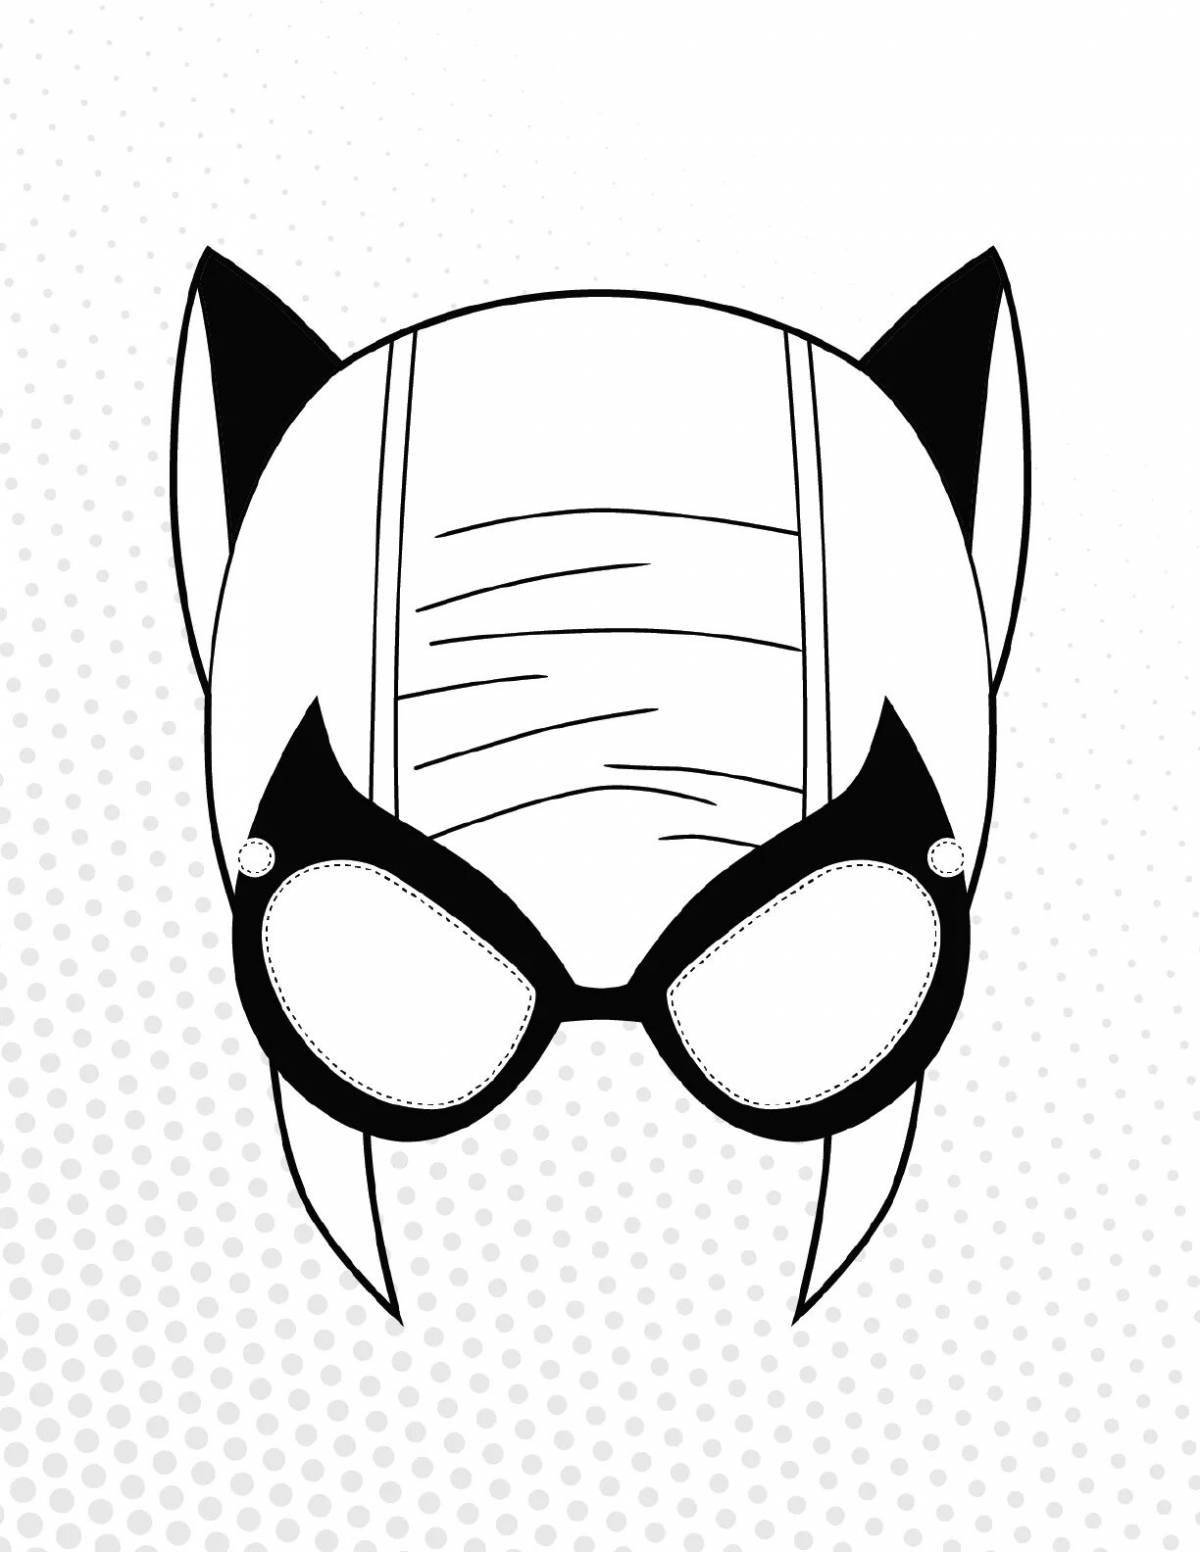 Charming superhero mask coloring page